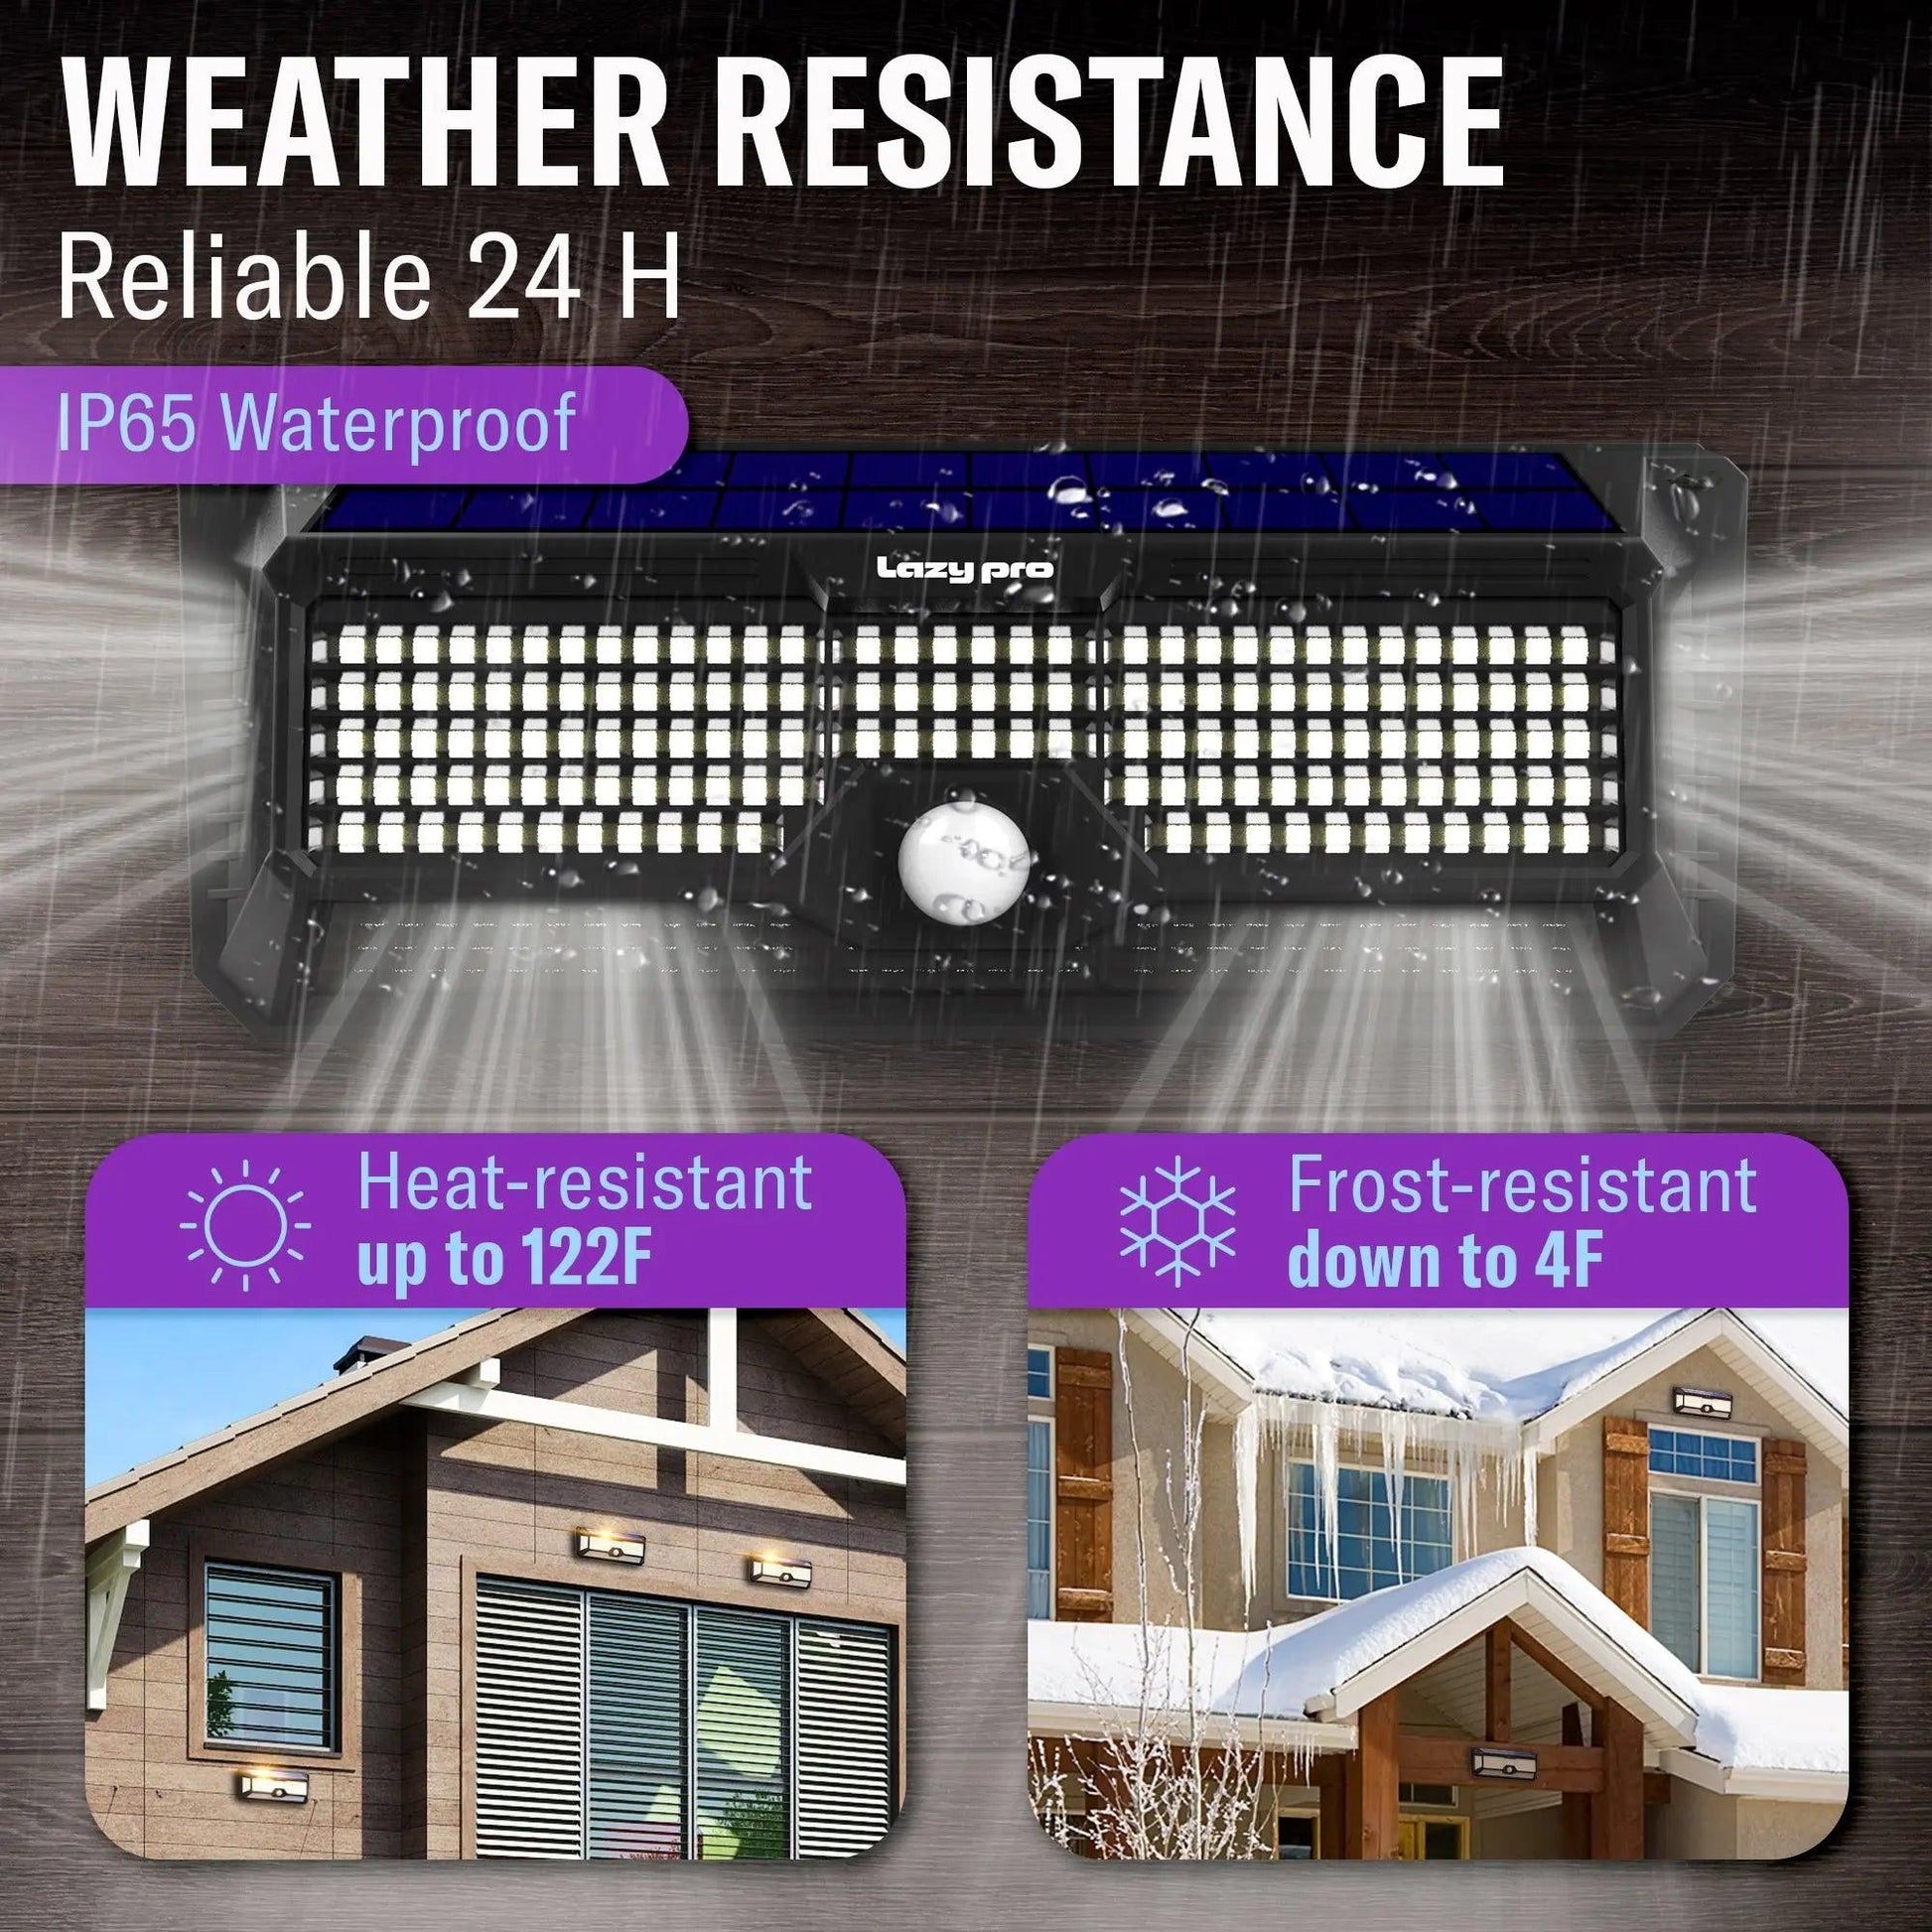 LazyLights B298 - Solar Flood Lights Outdoor with 298 Super-Bright LEDs, Motion Sensor, 2200 mAh battery - Lazy Pro